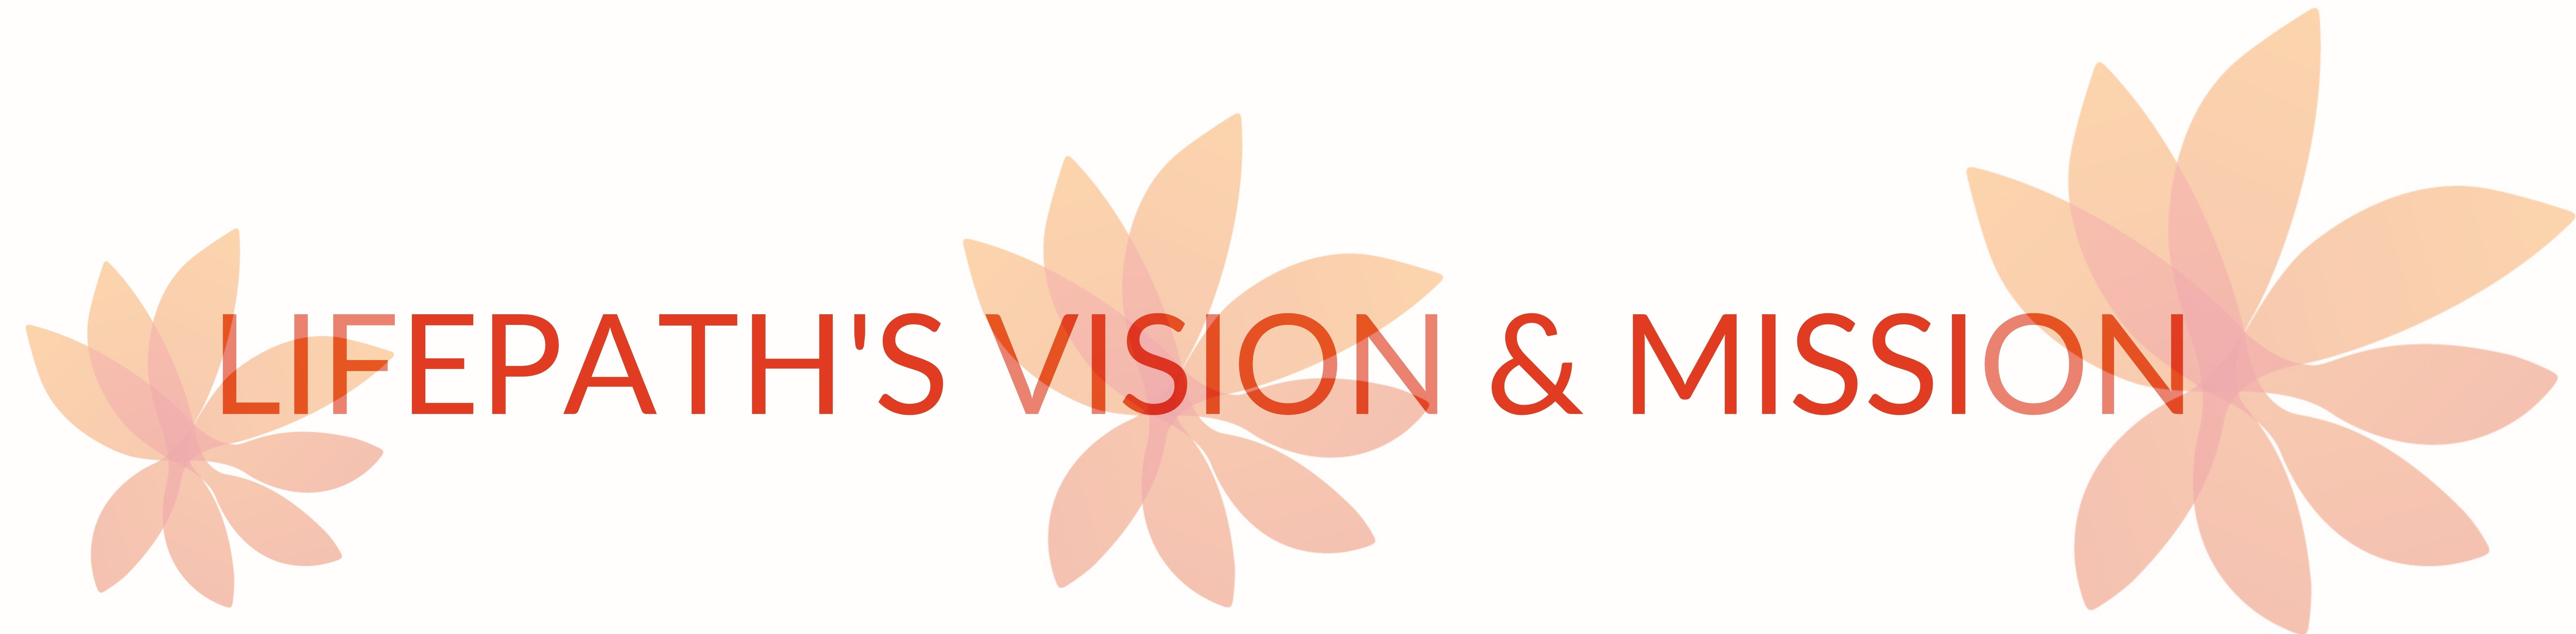 LifePath Mission & Vision